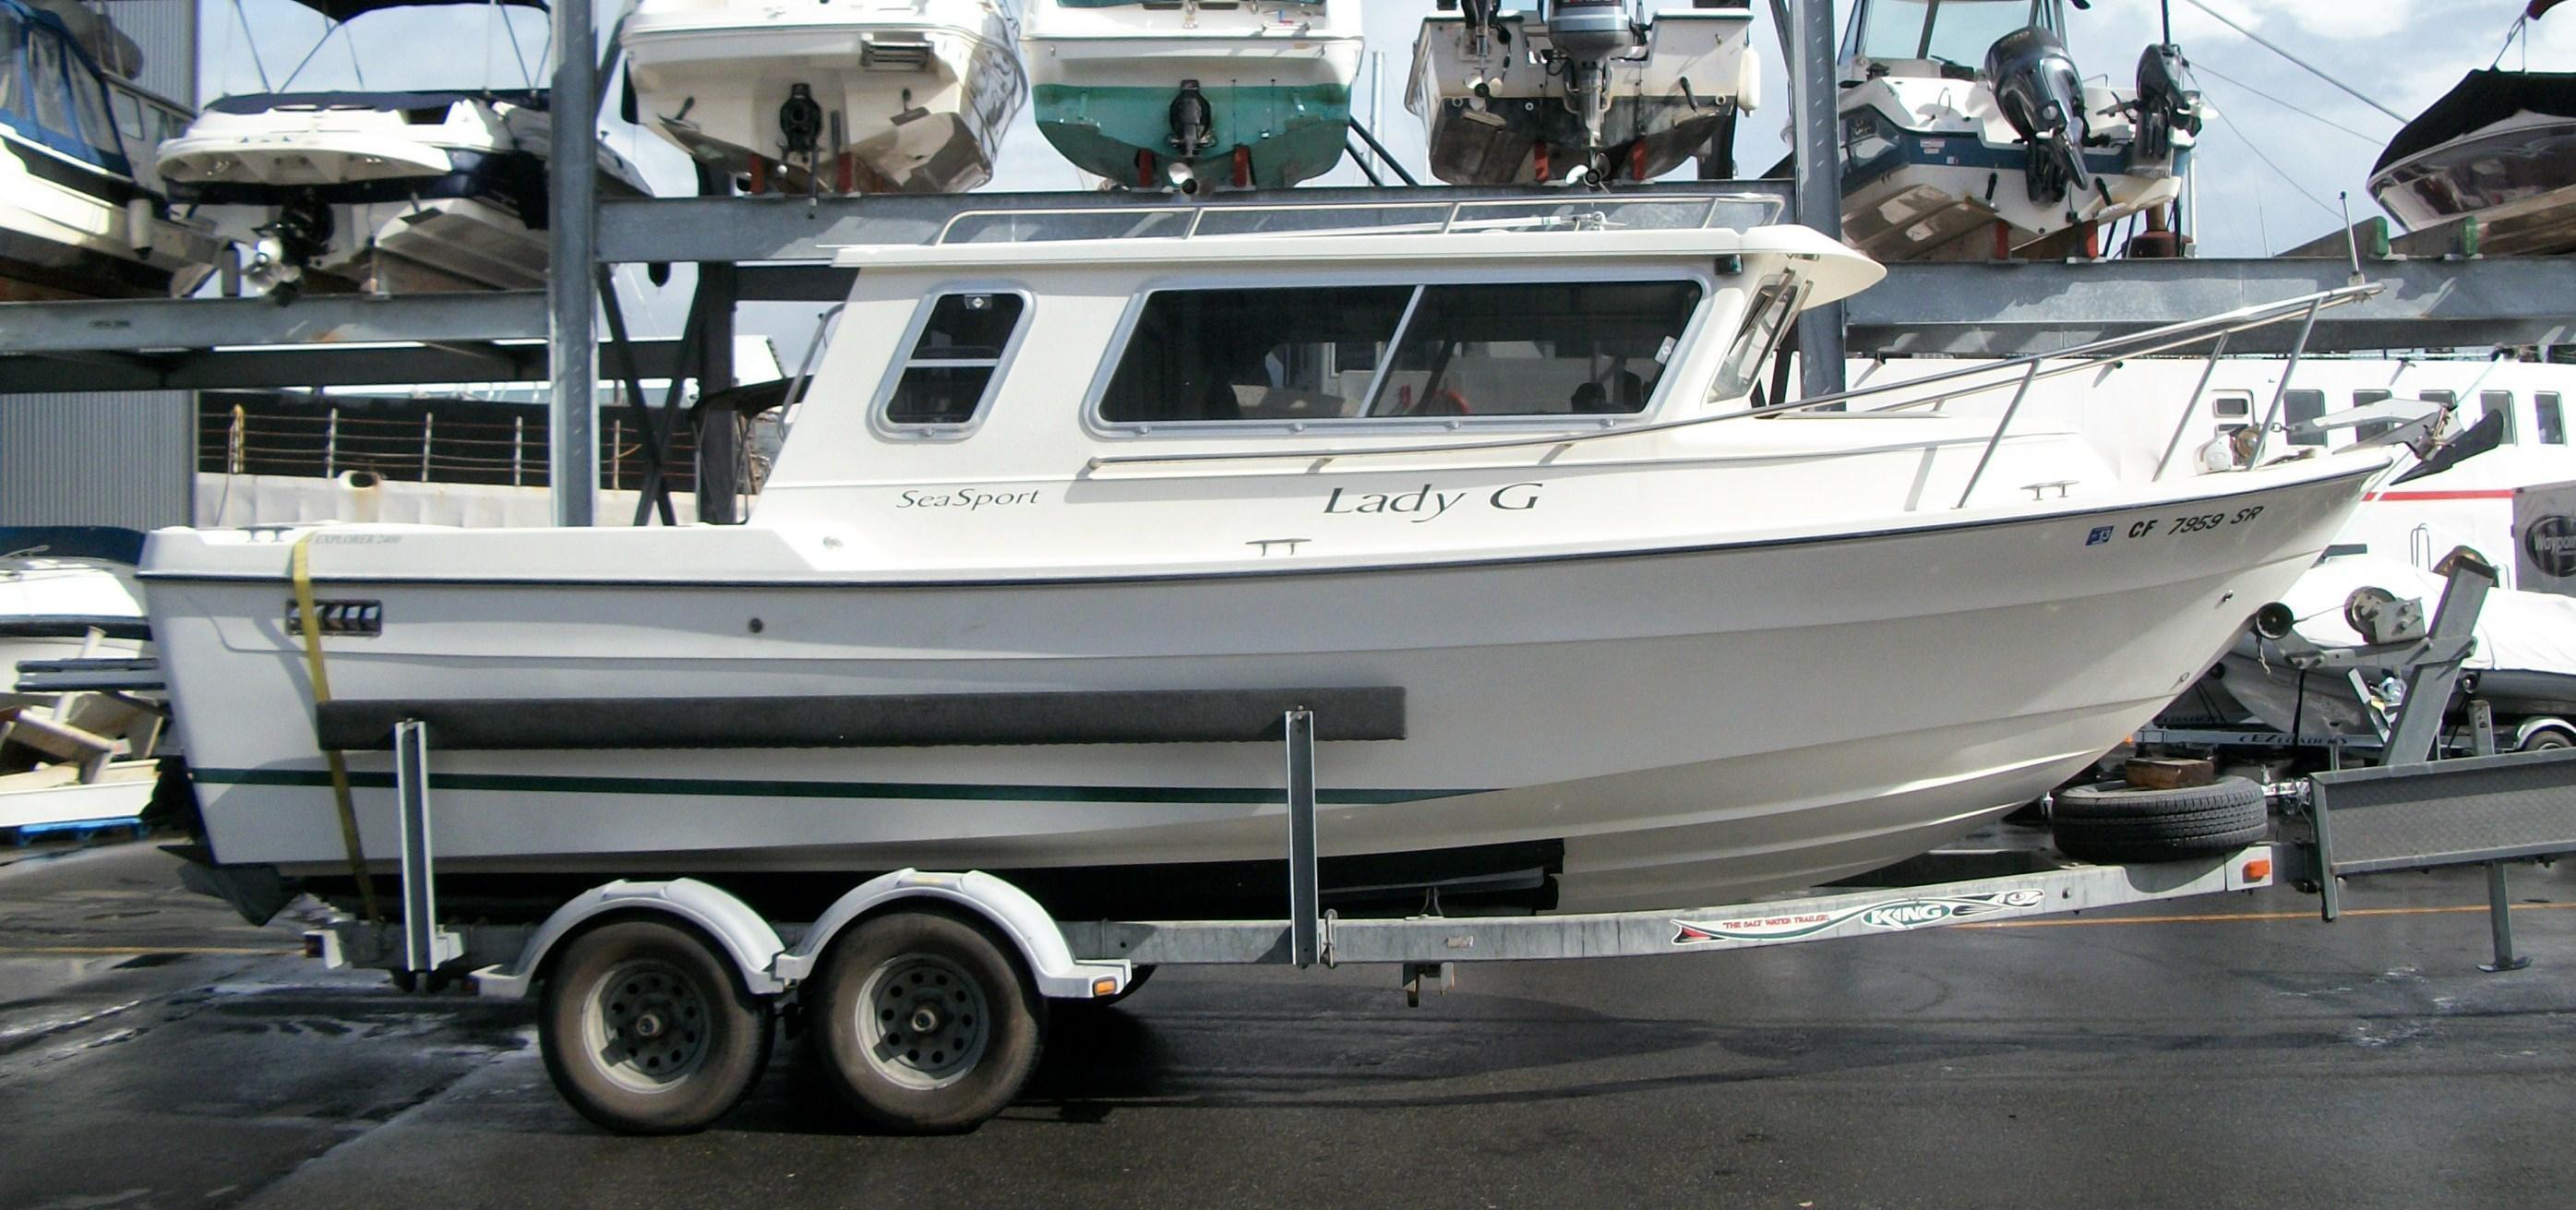 Sea Sport Explorer 2400, Seattle